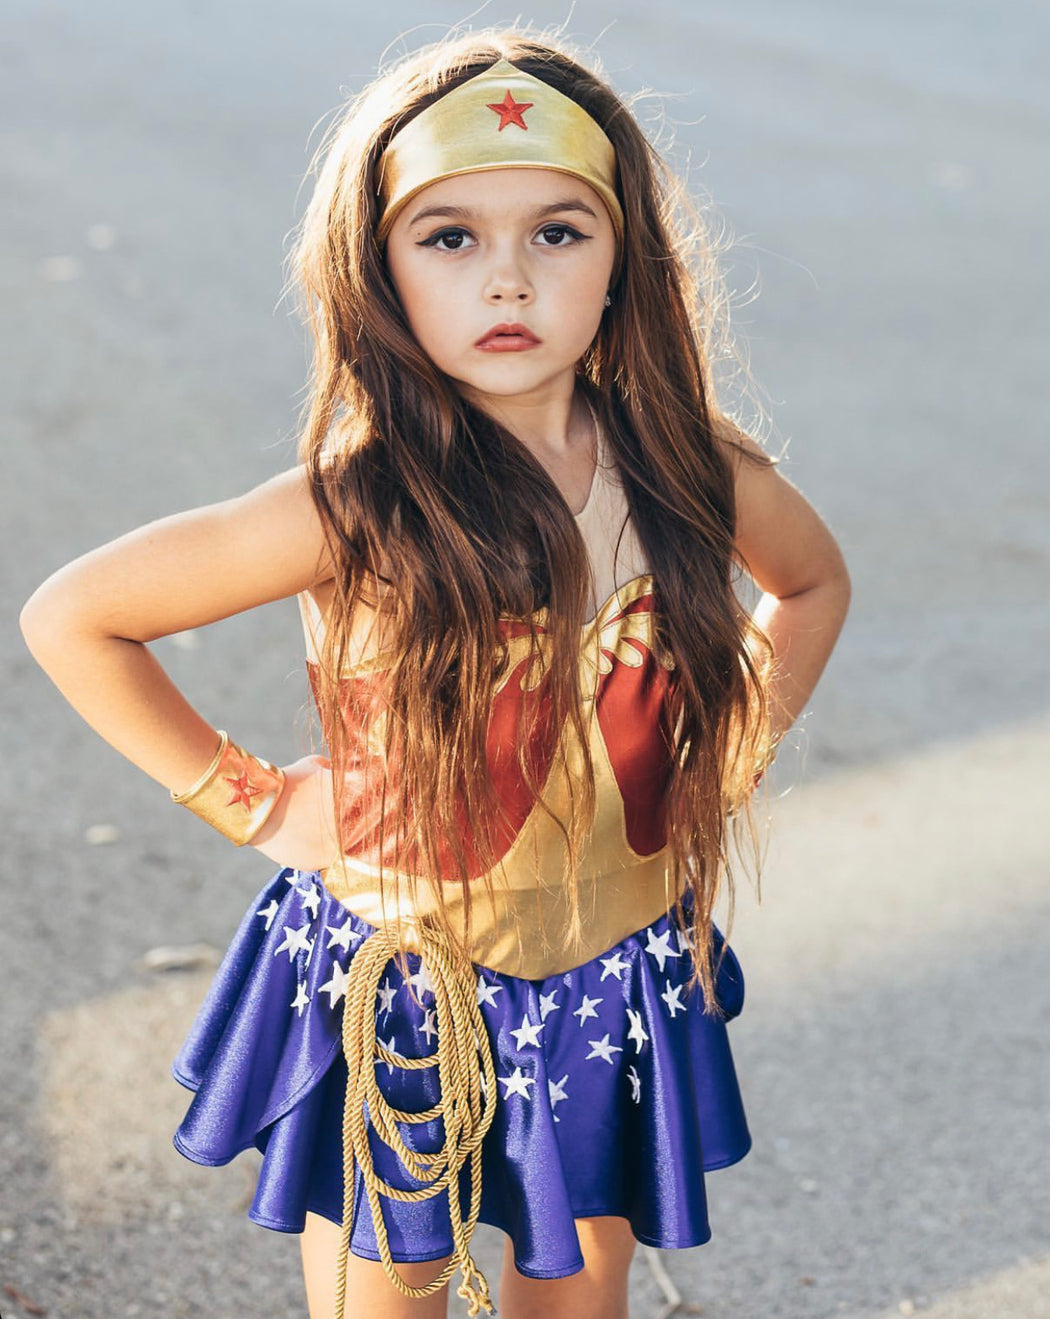 The Classic Wonder Woman/Kid Costume — Doloris Petunia